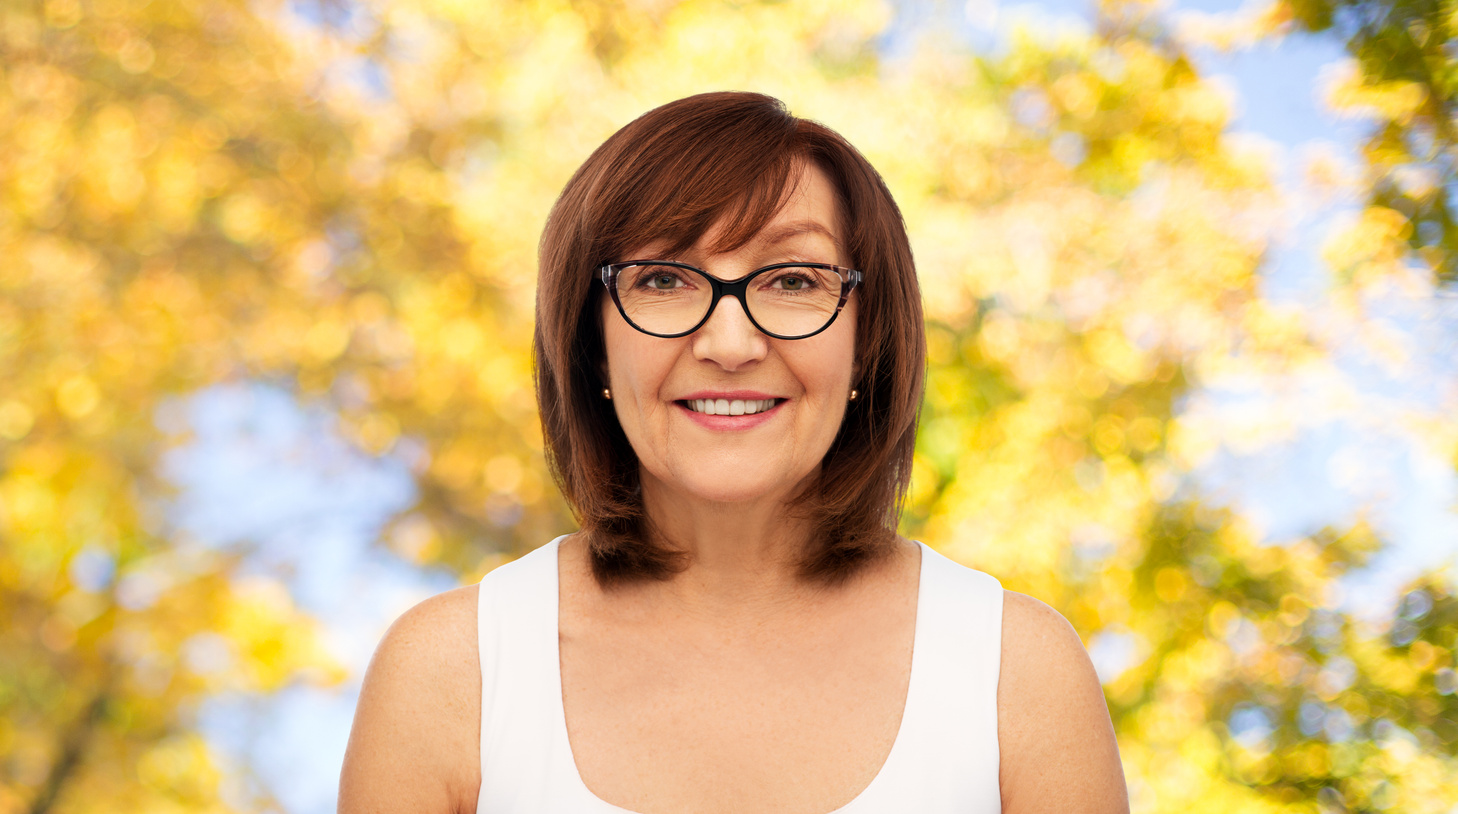 Portrait of Senior Woman in Glasses over Autumn